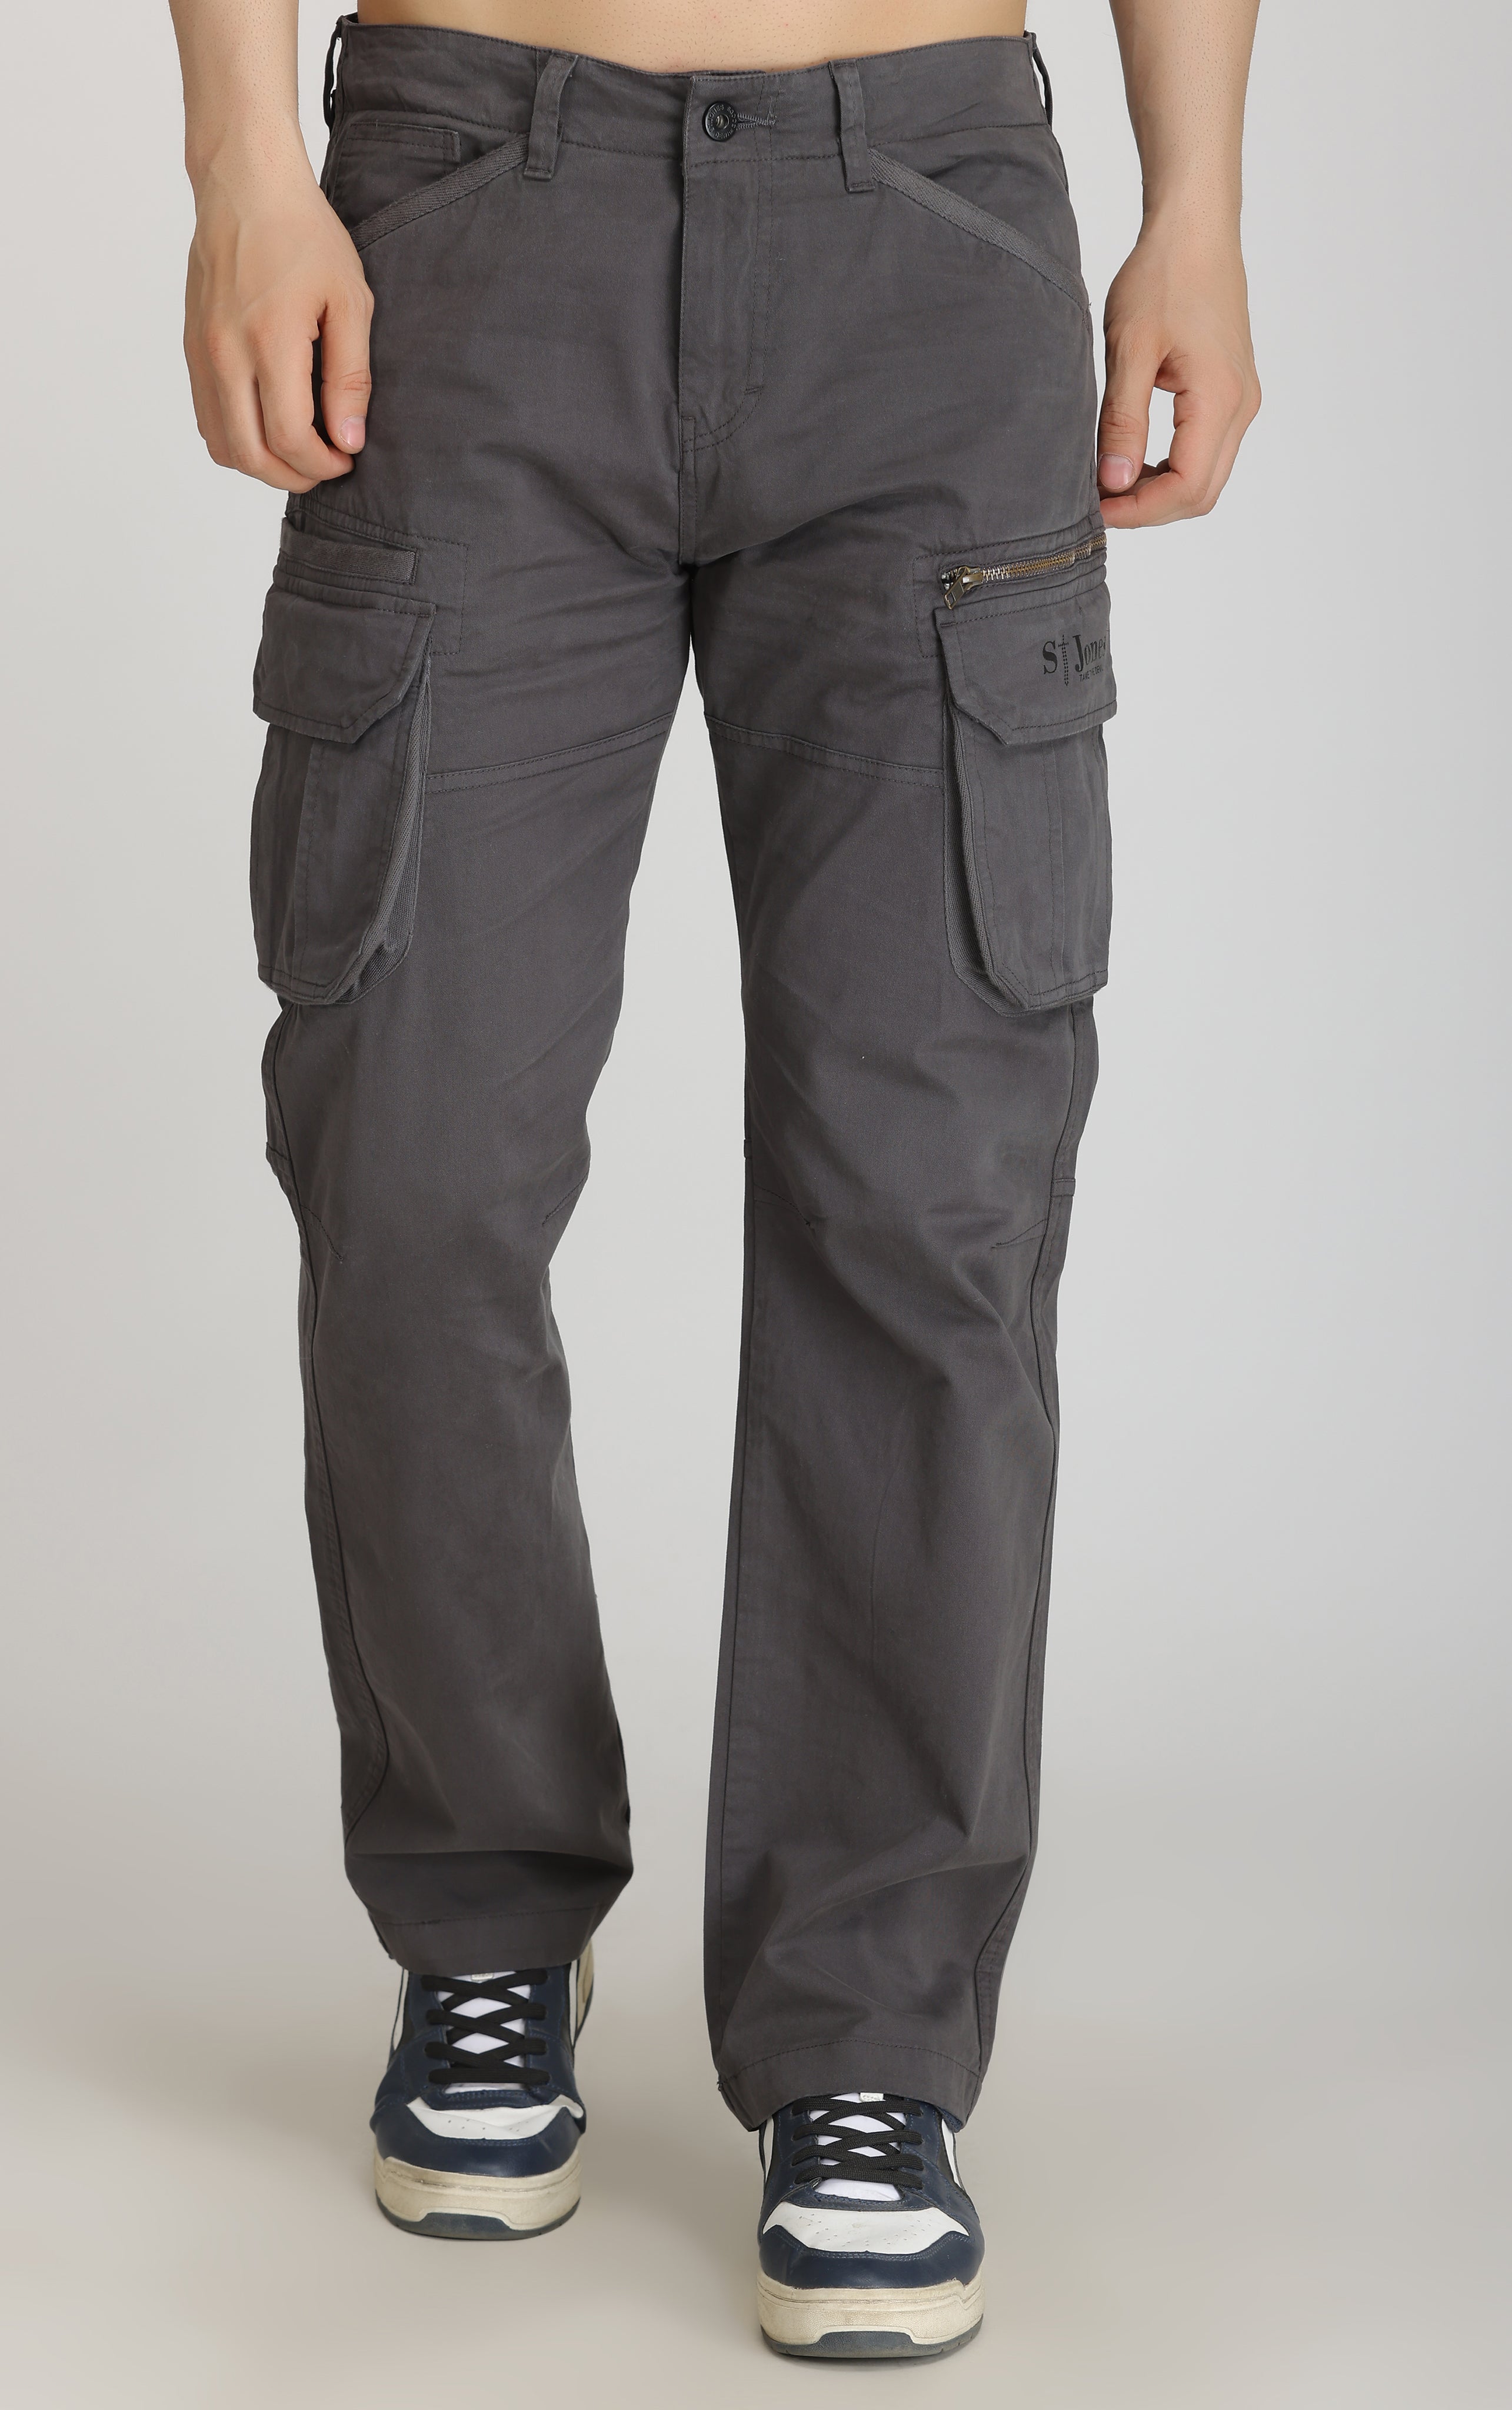 TRGPSG Women's Cargo Pants with 8 Pockets Cotton Casual Work Pants(No  Belt),Khaki 6 - Walmart.com